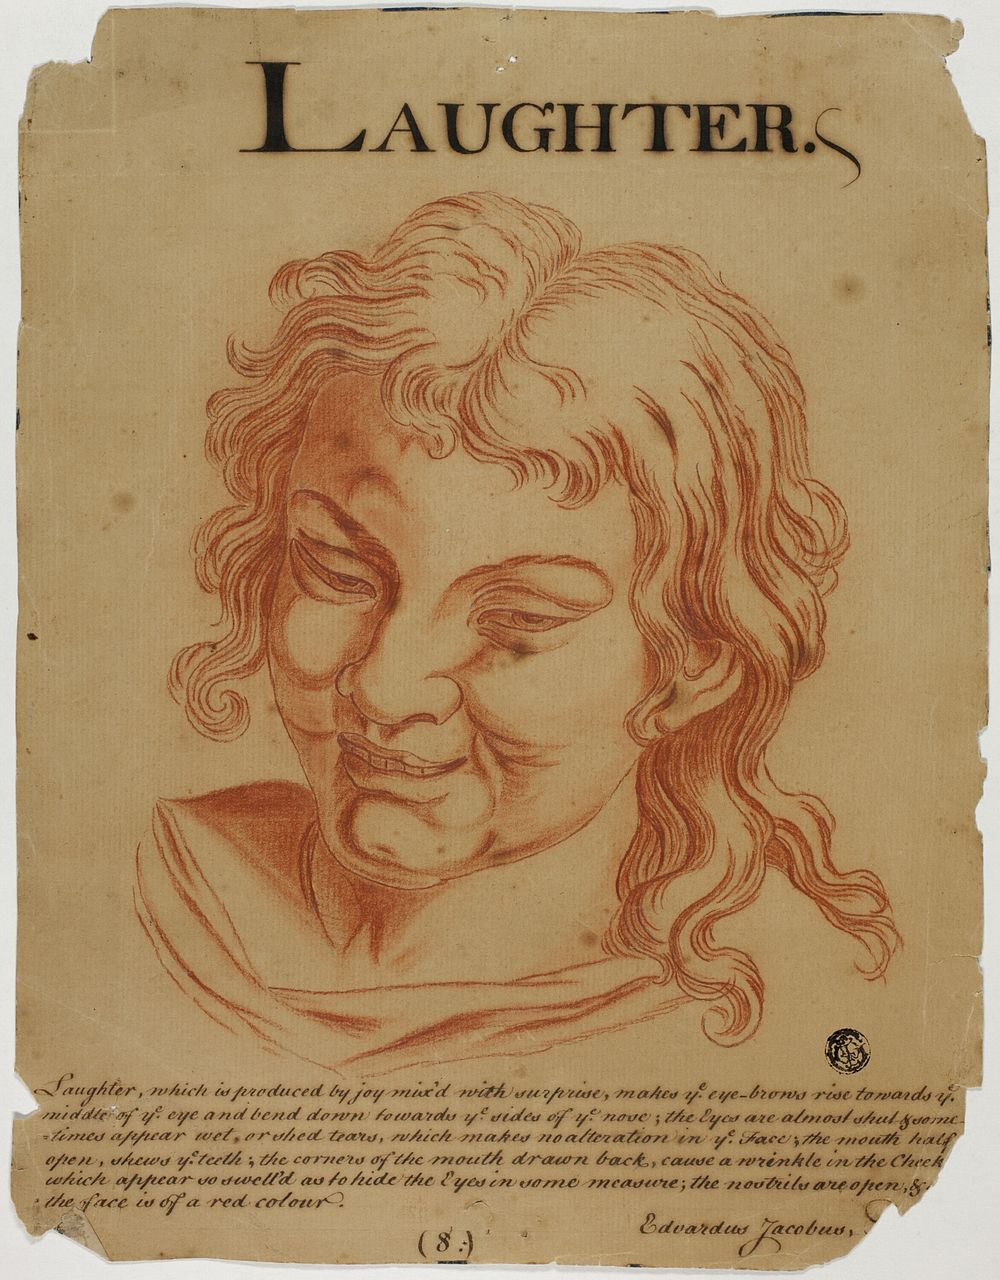 Laughter by Eduardus Jacobus